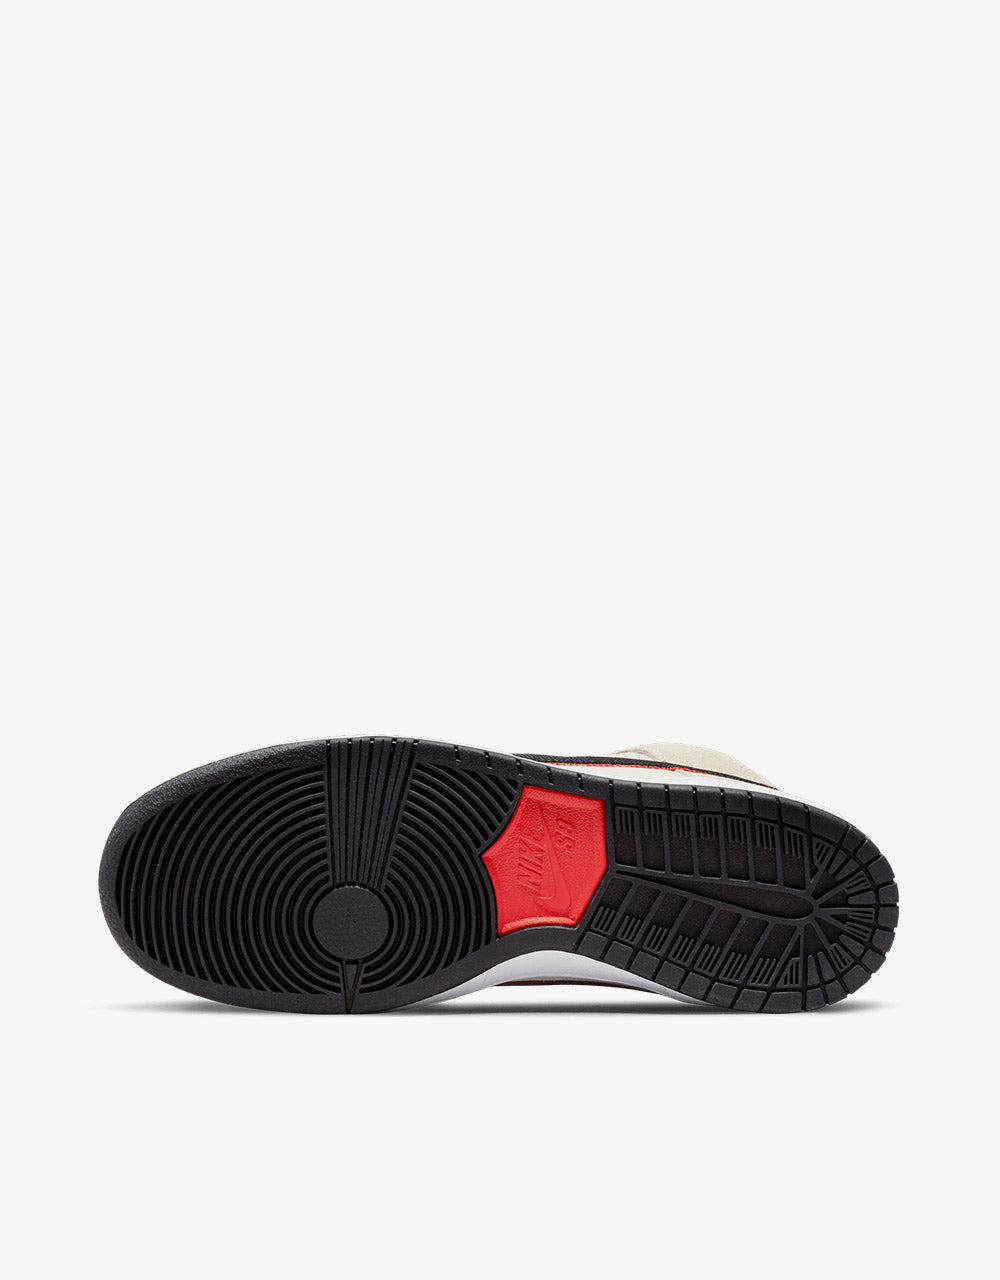 Nike SB 'Giants' Dunk High Pro Premium Skate Shoes